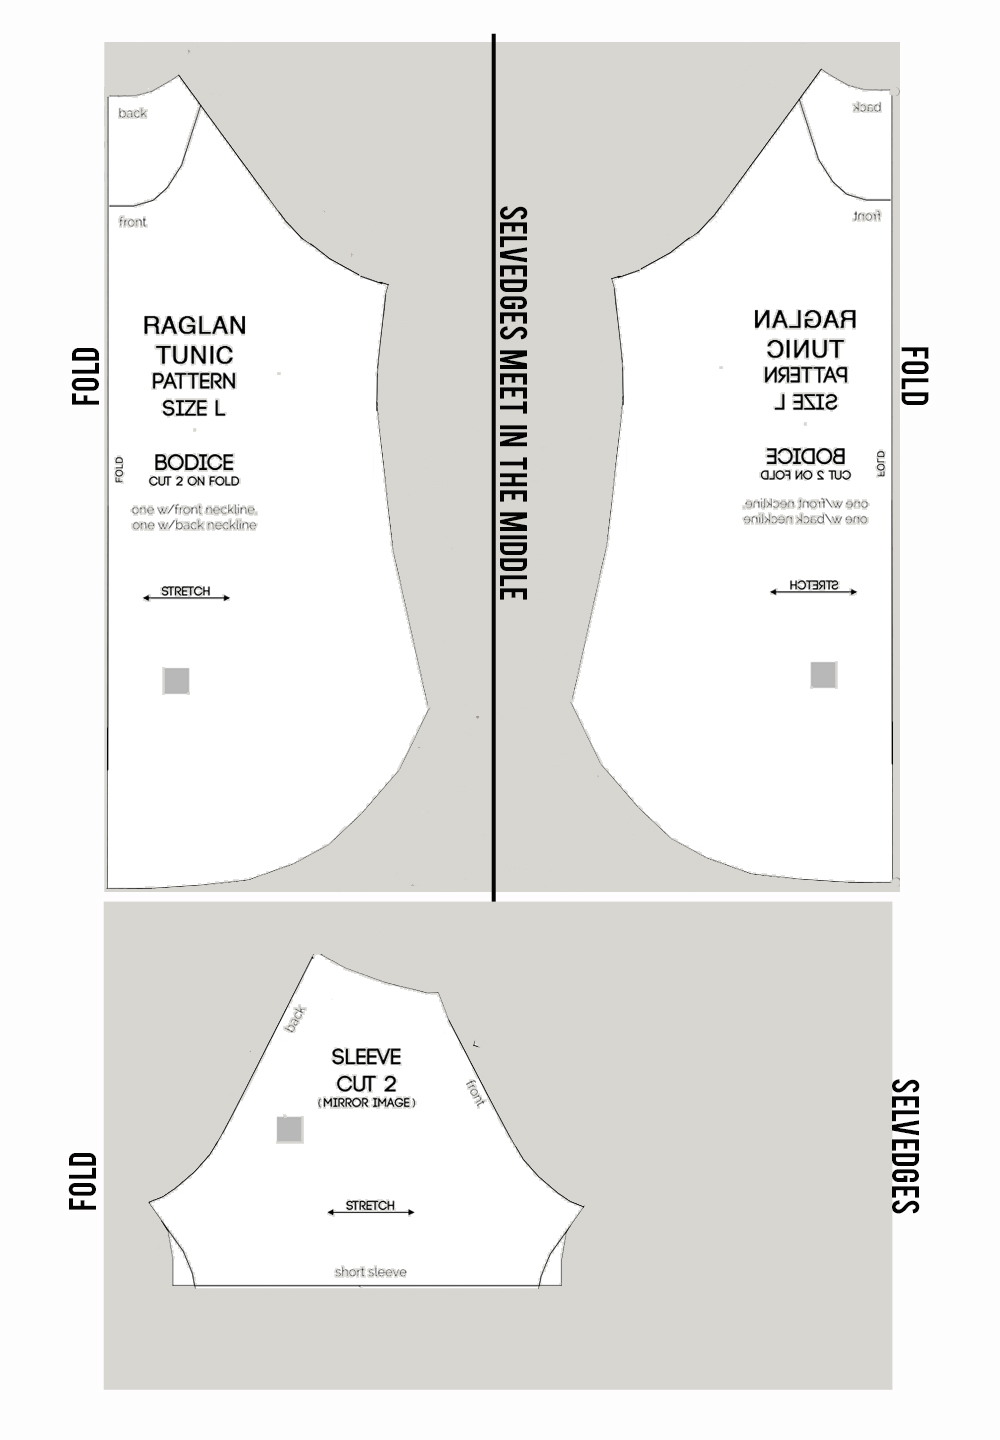 Raglan Tunic pattern cutting diagram